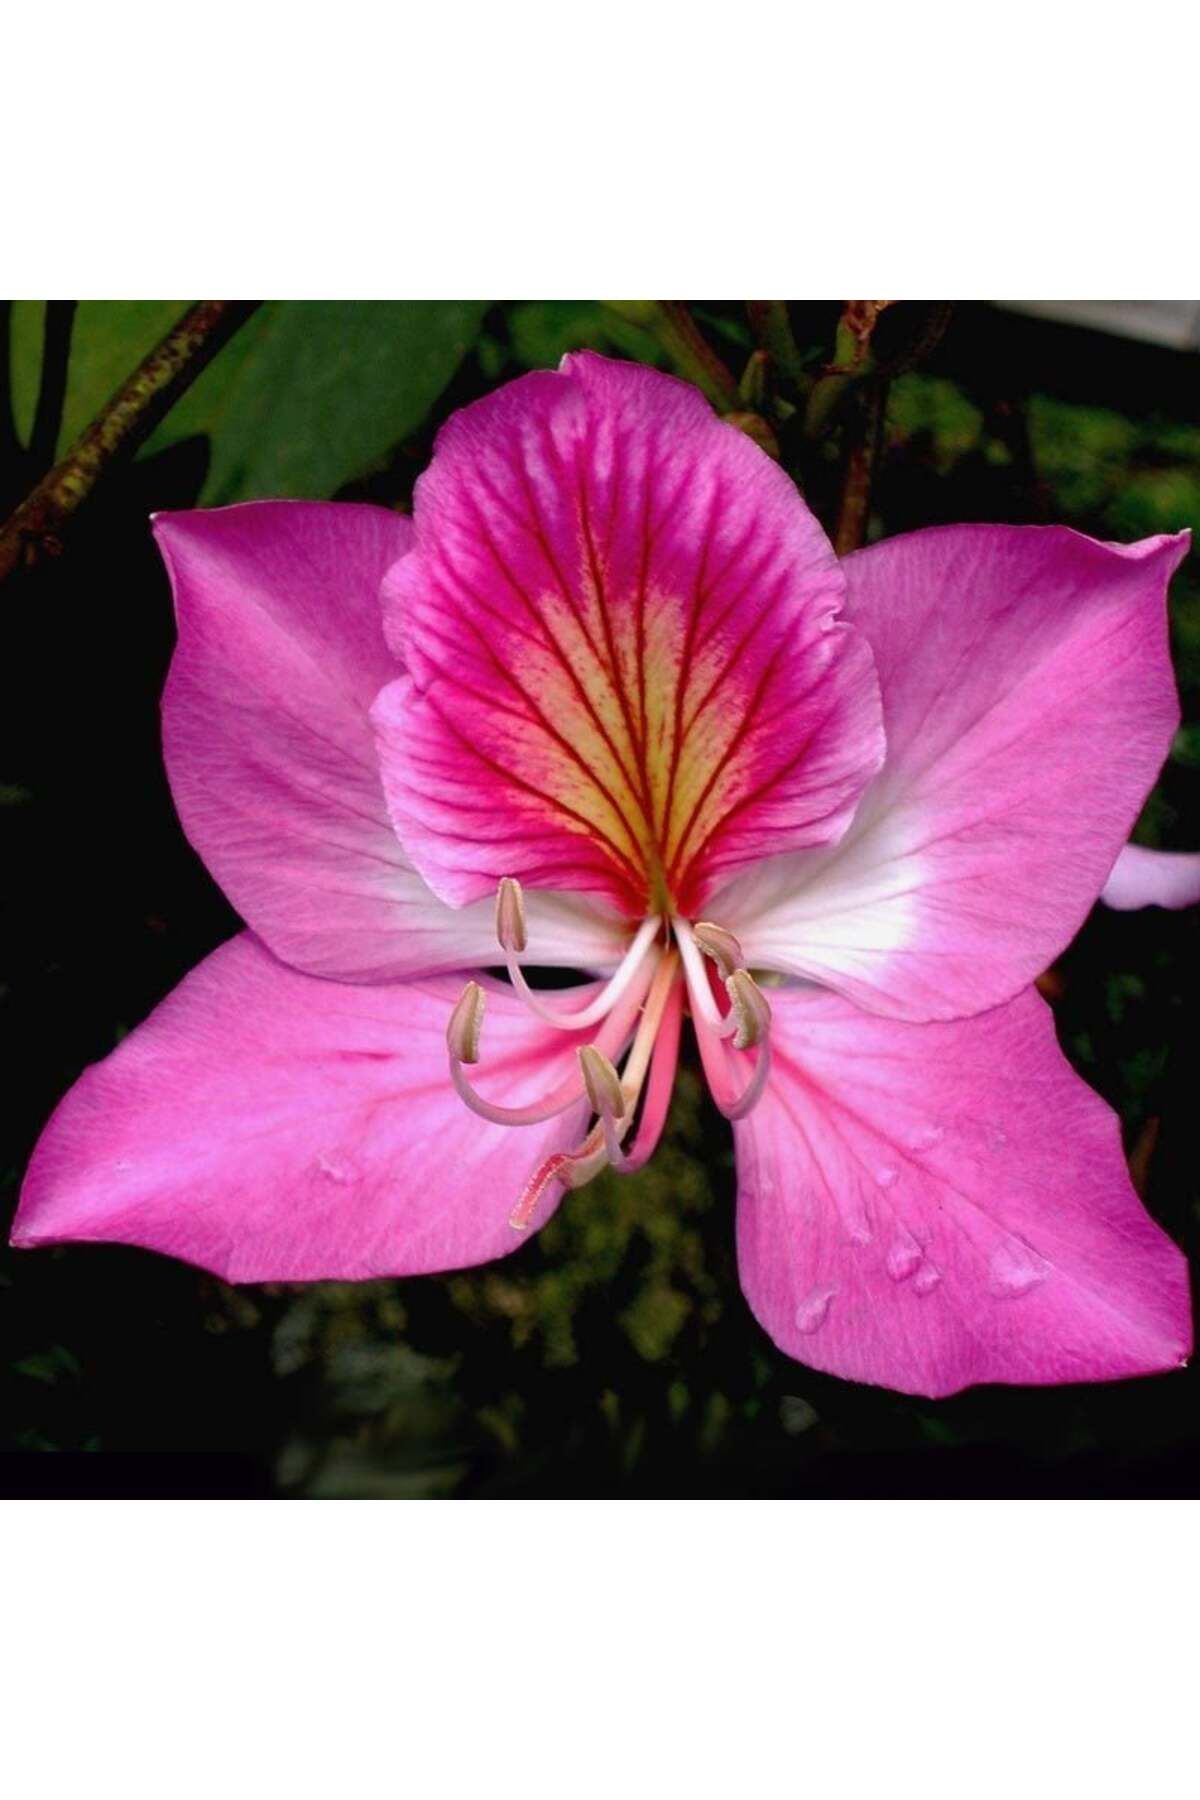 ZENGARDEN EV VE BAHÇE Pembe orkide ağacı tohumu bauhinia variegata